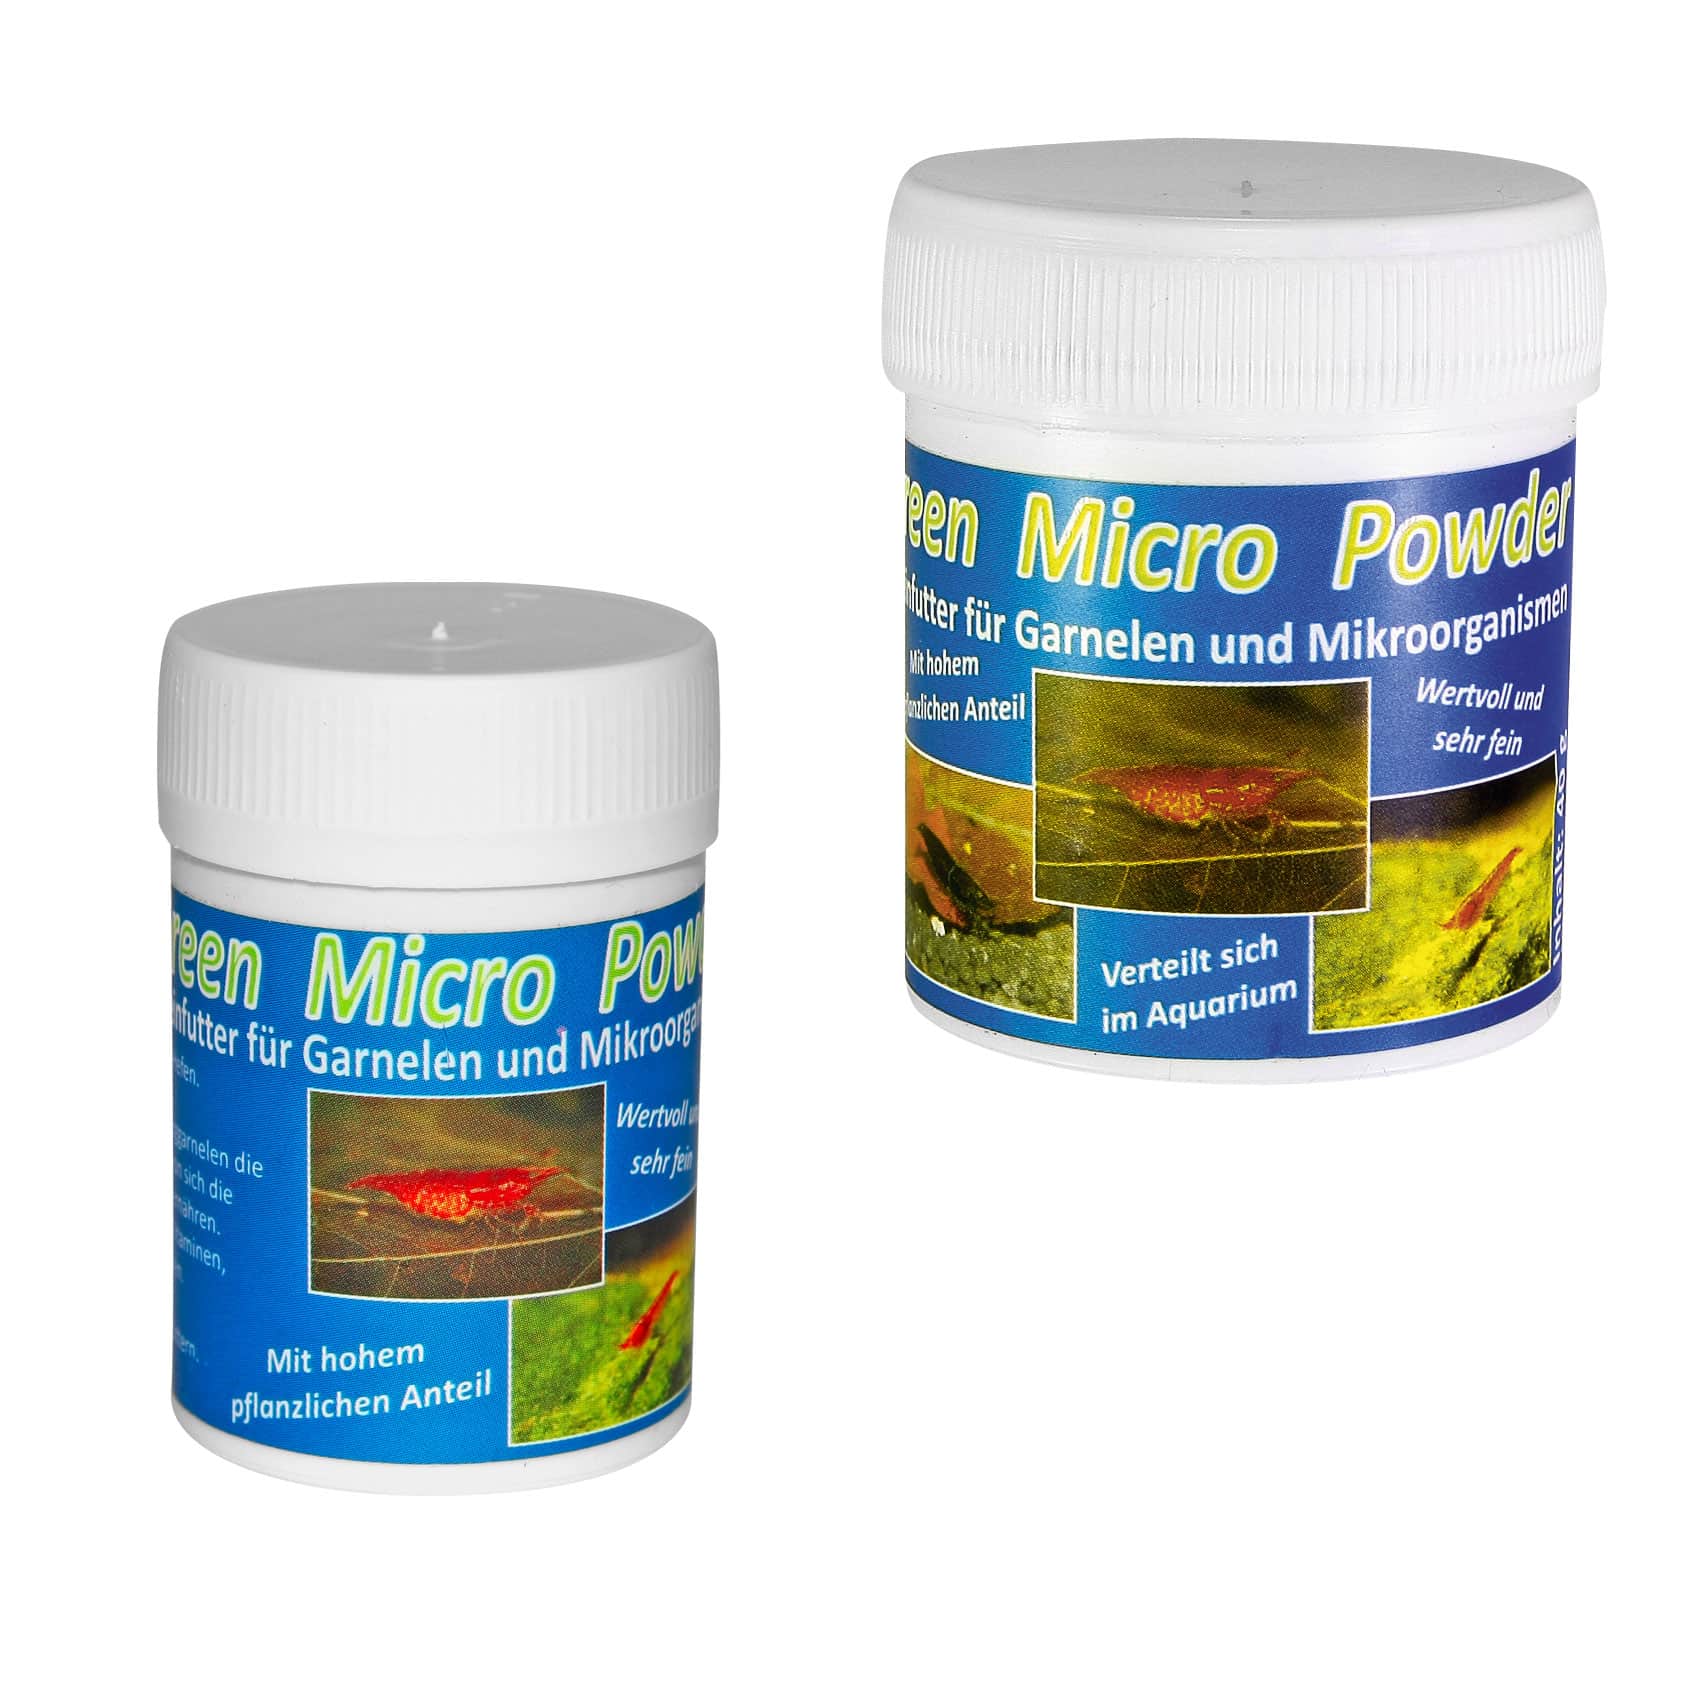 Green Micro Powder